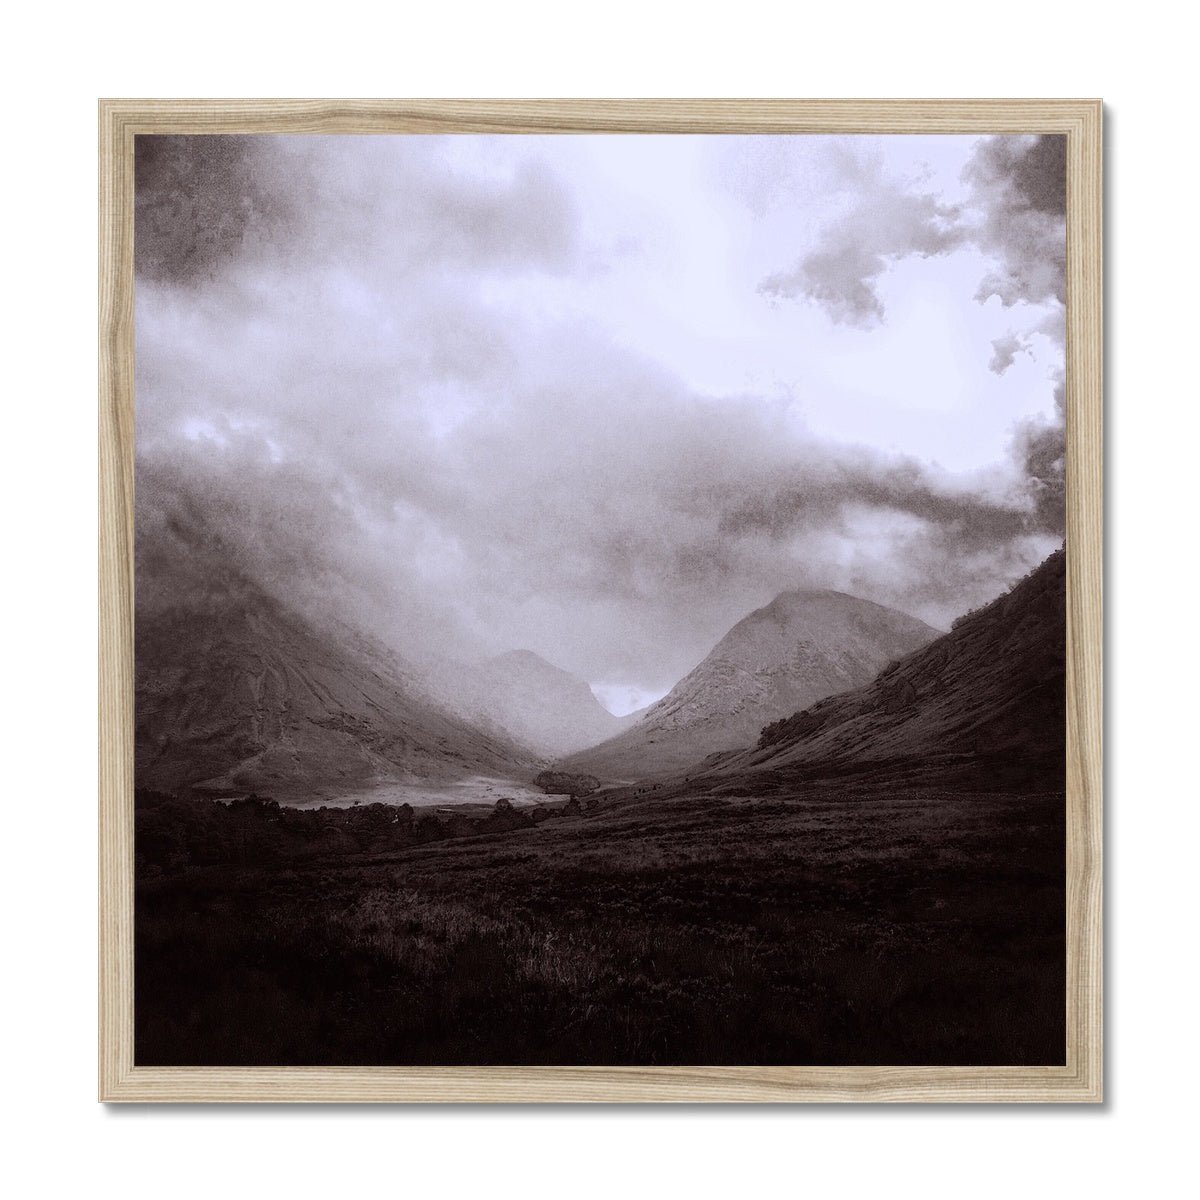 Glencoe Mist Painting | Framed Prints From Scotland-Framed Prints-Glencoe Art Gallery-20"x20"-Natural Frame-Paintings, Prints, Homeware, Art Gifts From Scotland By Scottish Artist Kevin Hunter